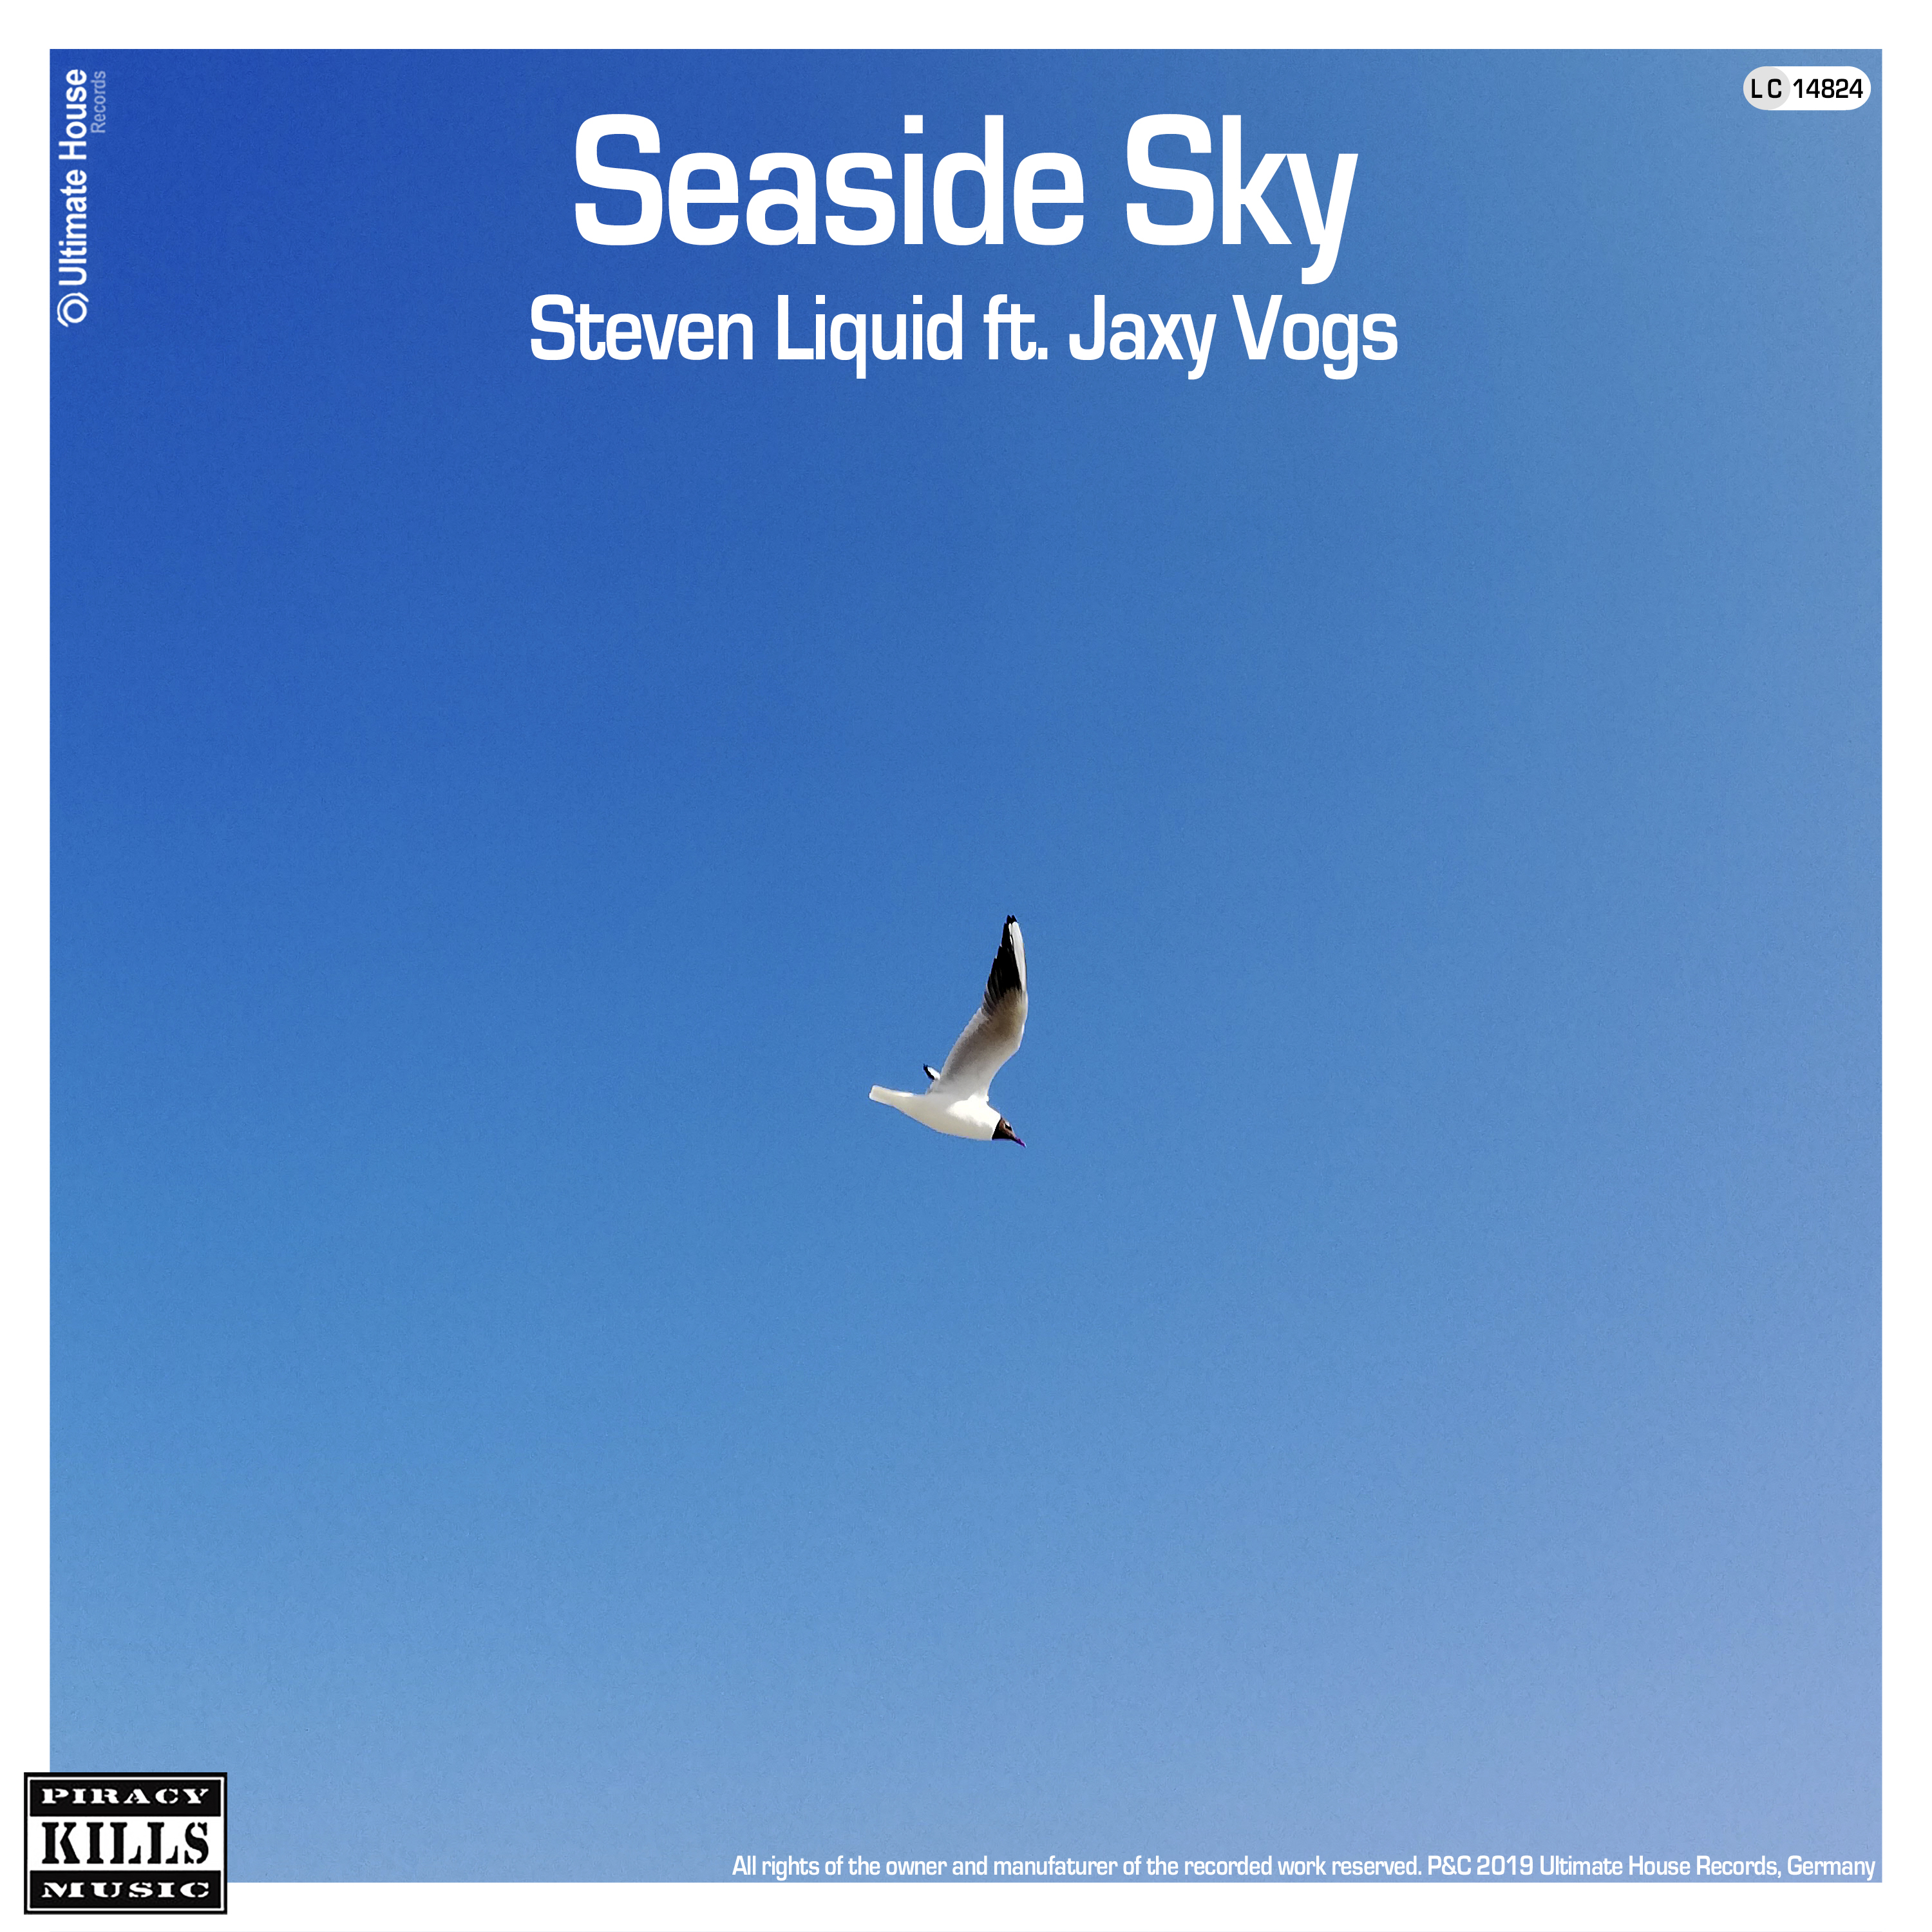 https://www.ultimate-house-records.com/wp-content/uploads/2019/05/ult127-Seaside_Sky-3000px.jpg